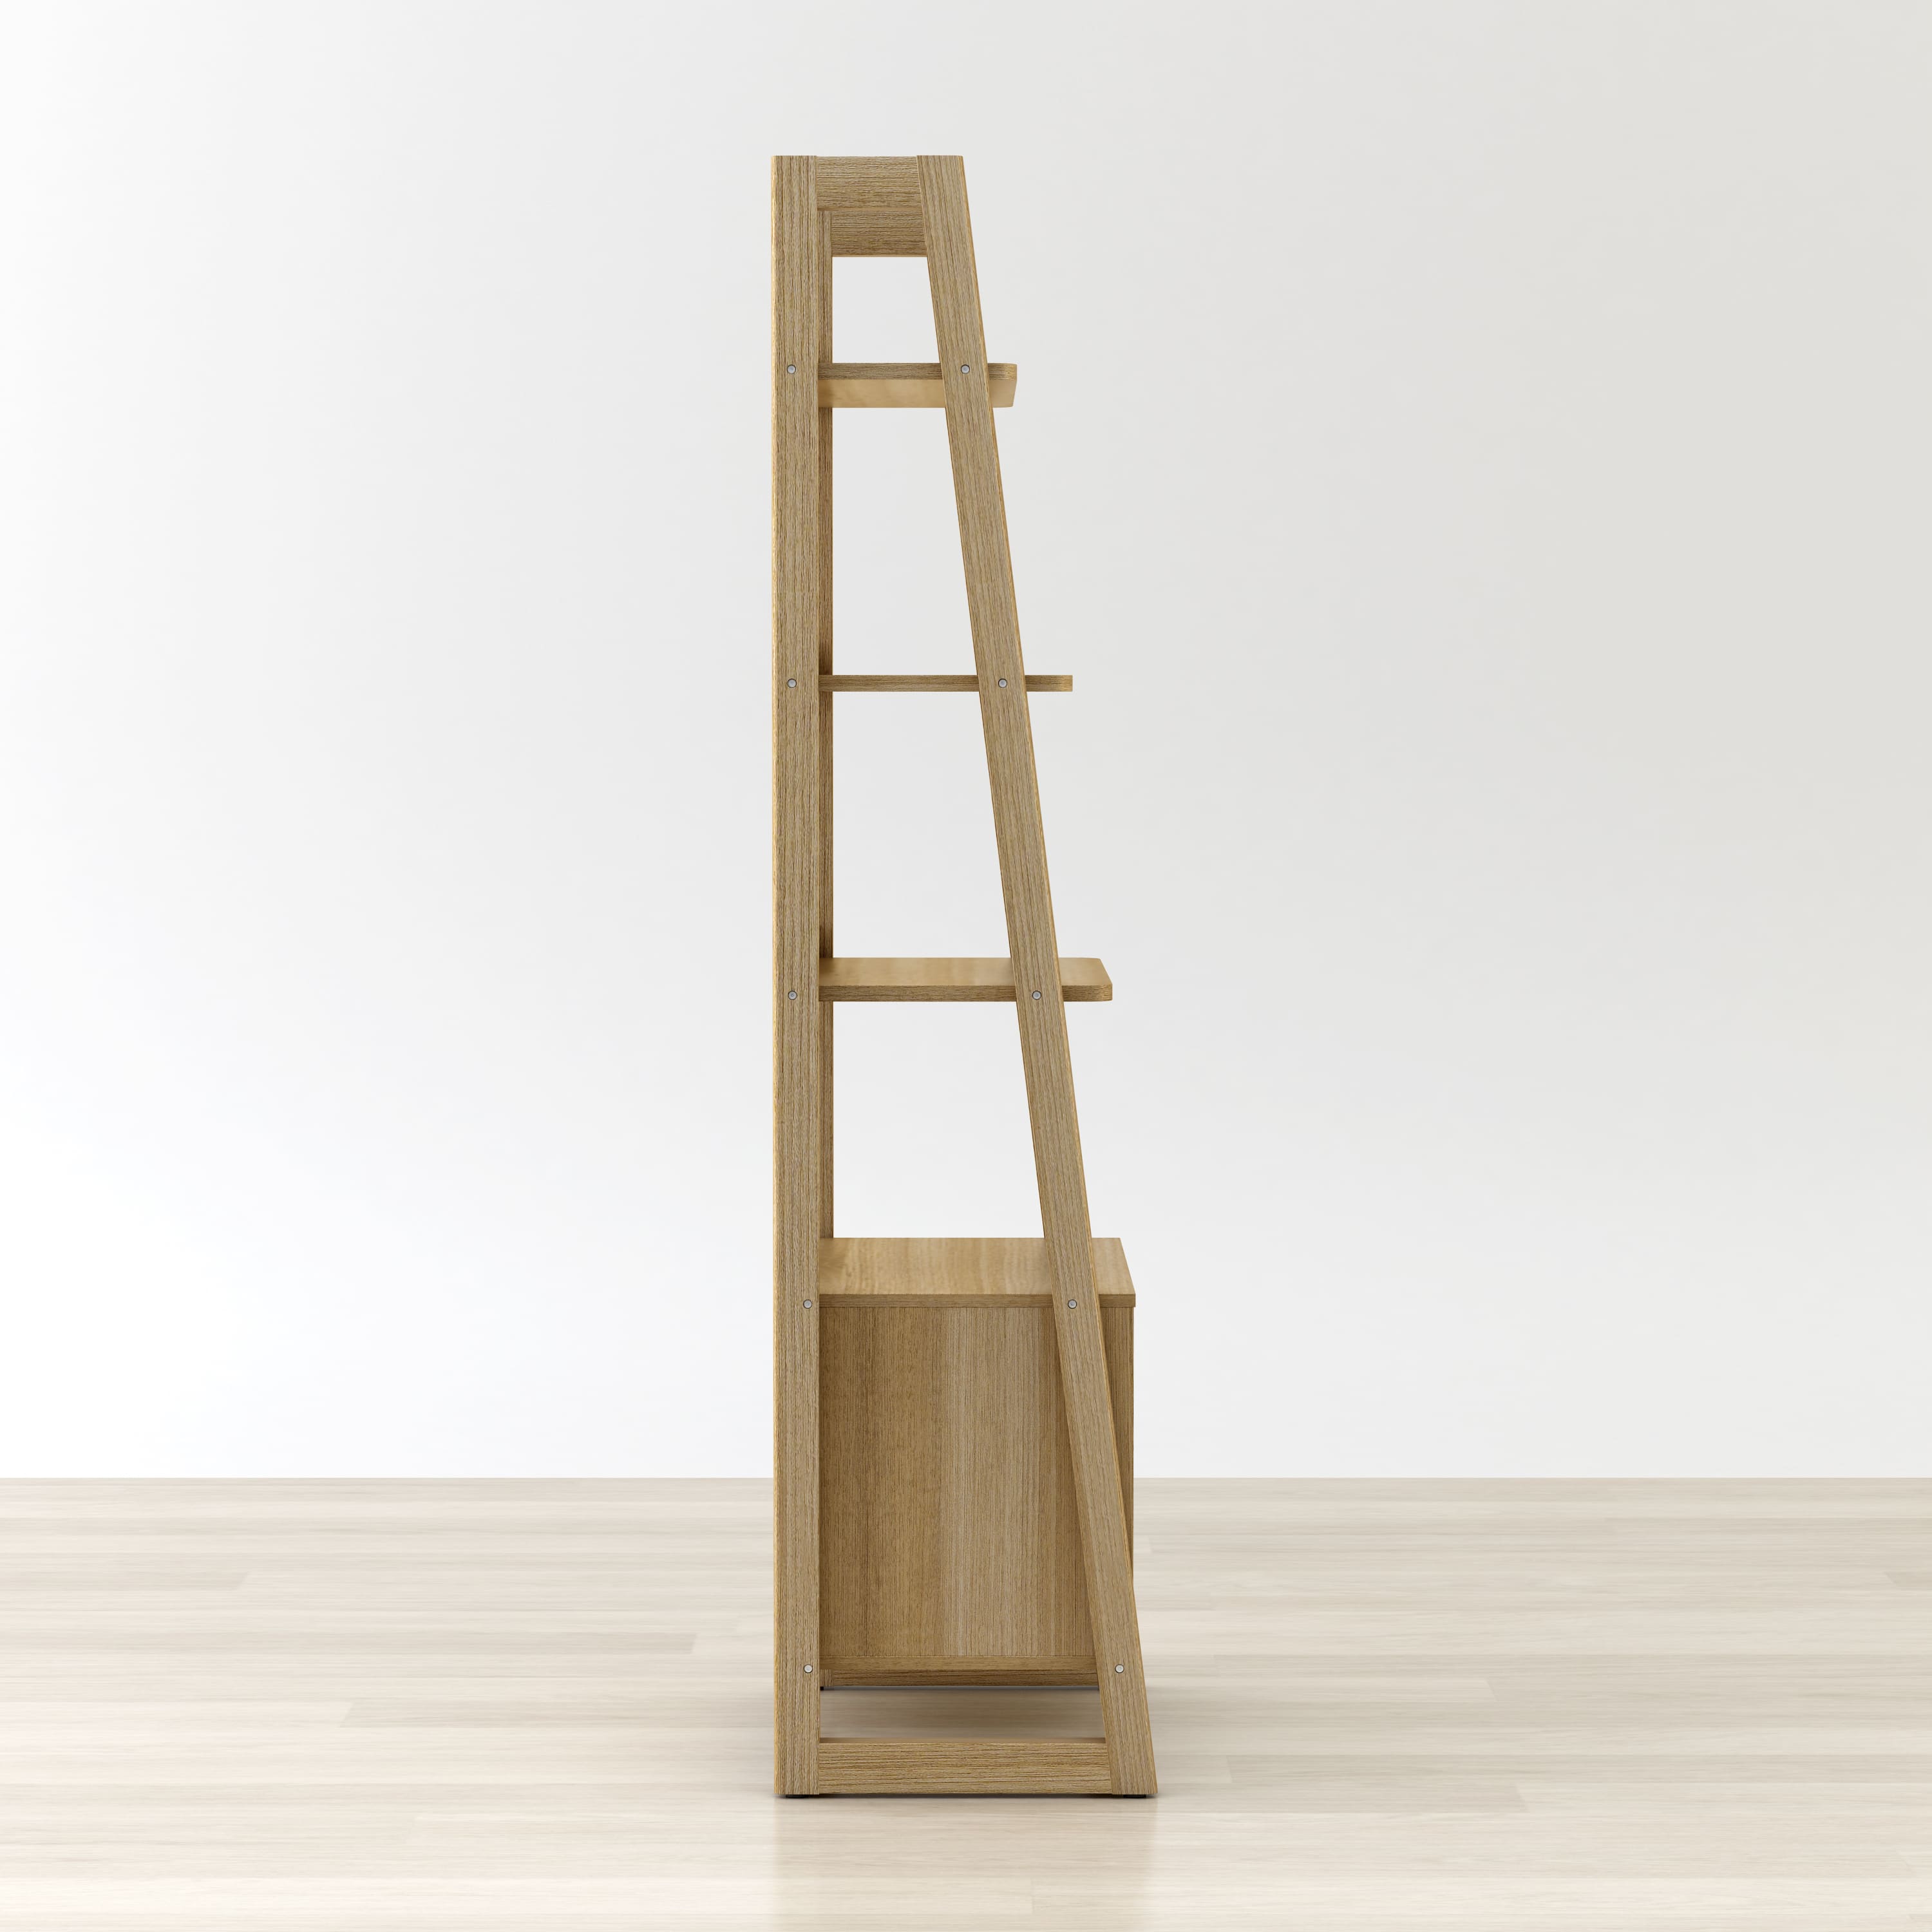 Anderson teak ladder bookshelf - side view